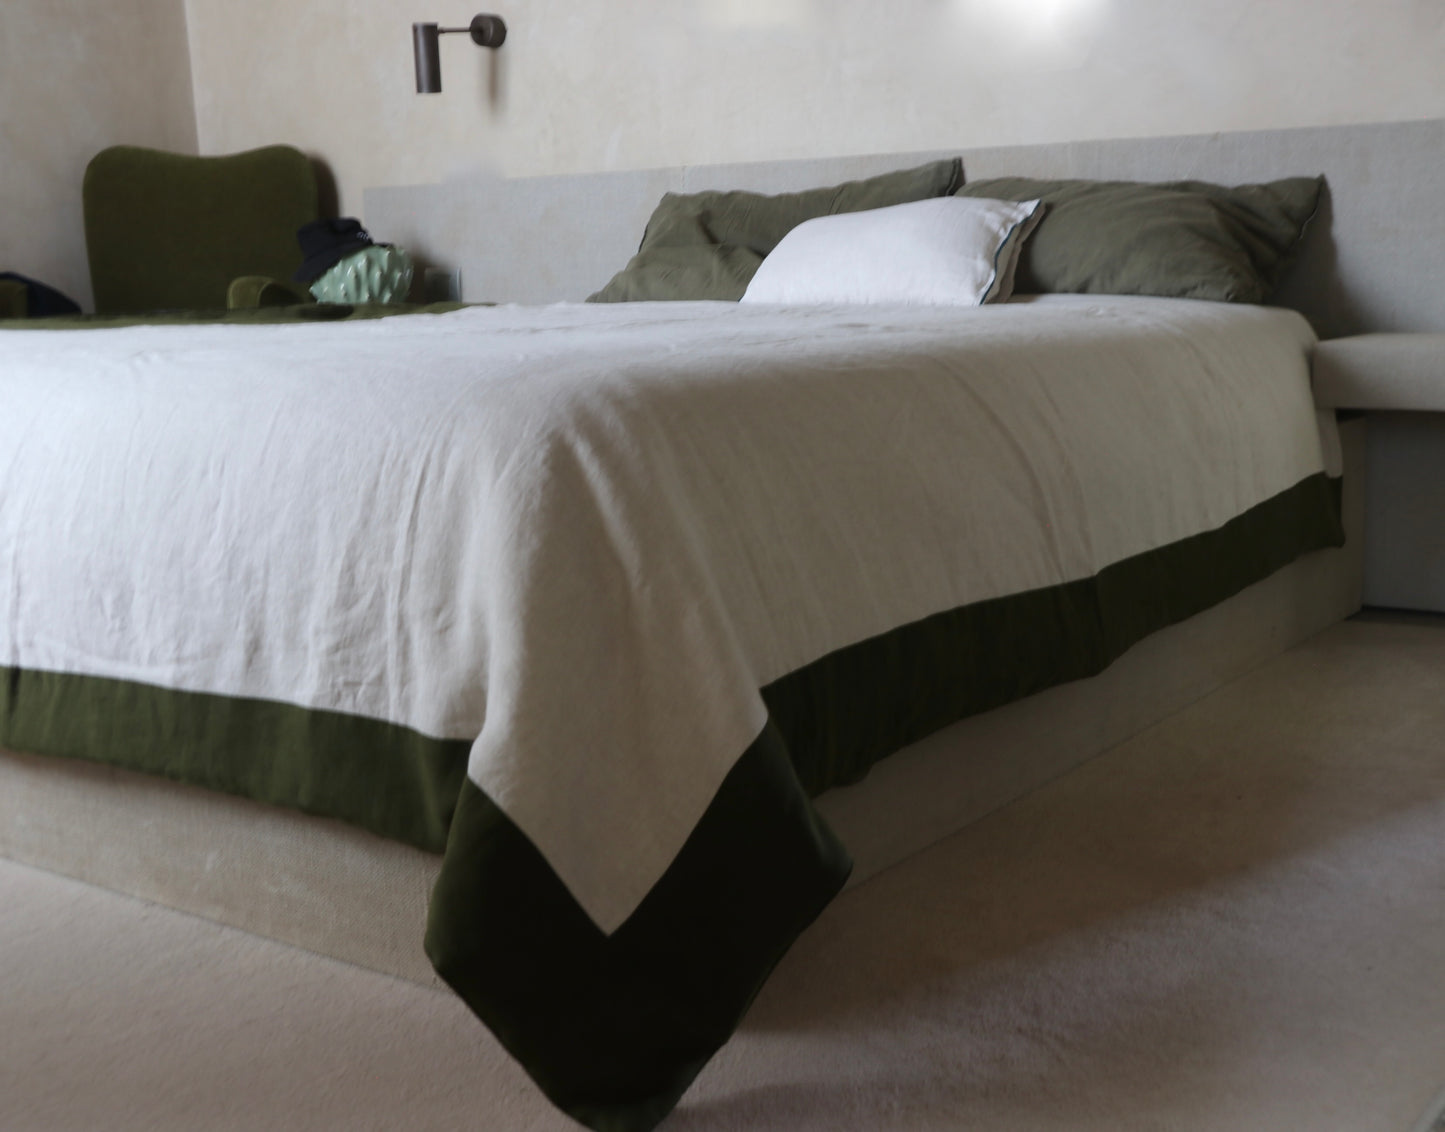 linen blanket with green border in US queen size, sample item